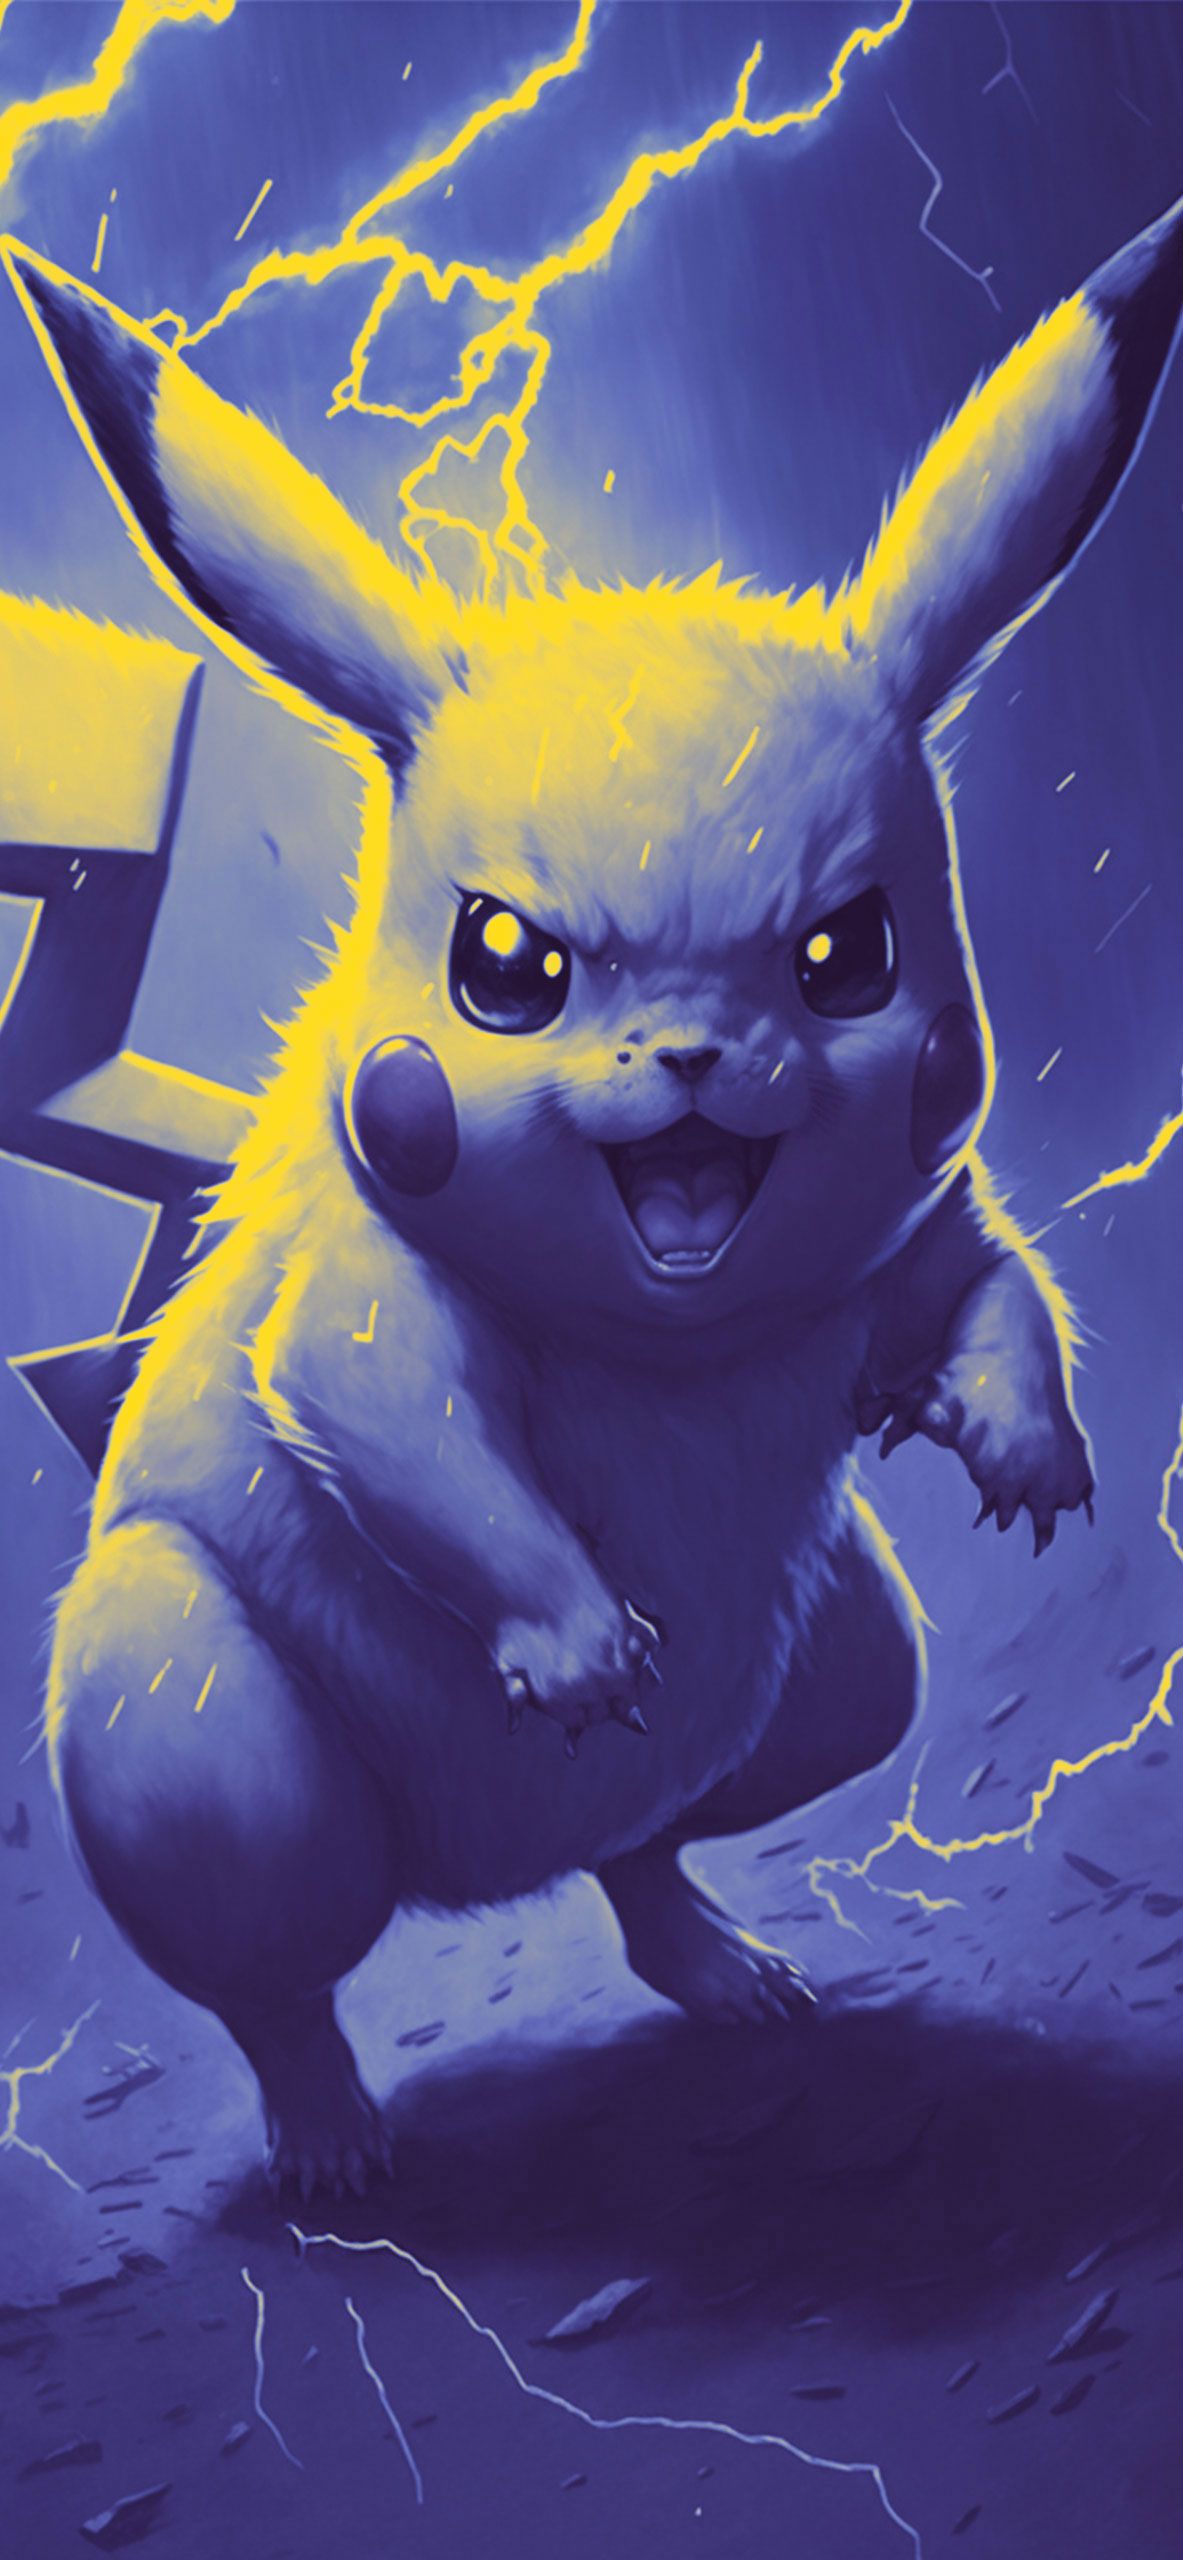  Pikachu Hintergrundbild 1183x2560. Pokémon Pikachu & Lightning Wallpaper Wallpaper 4k